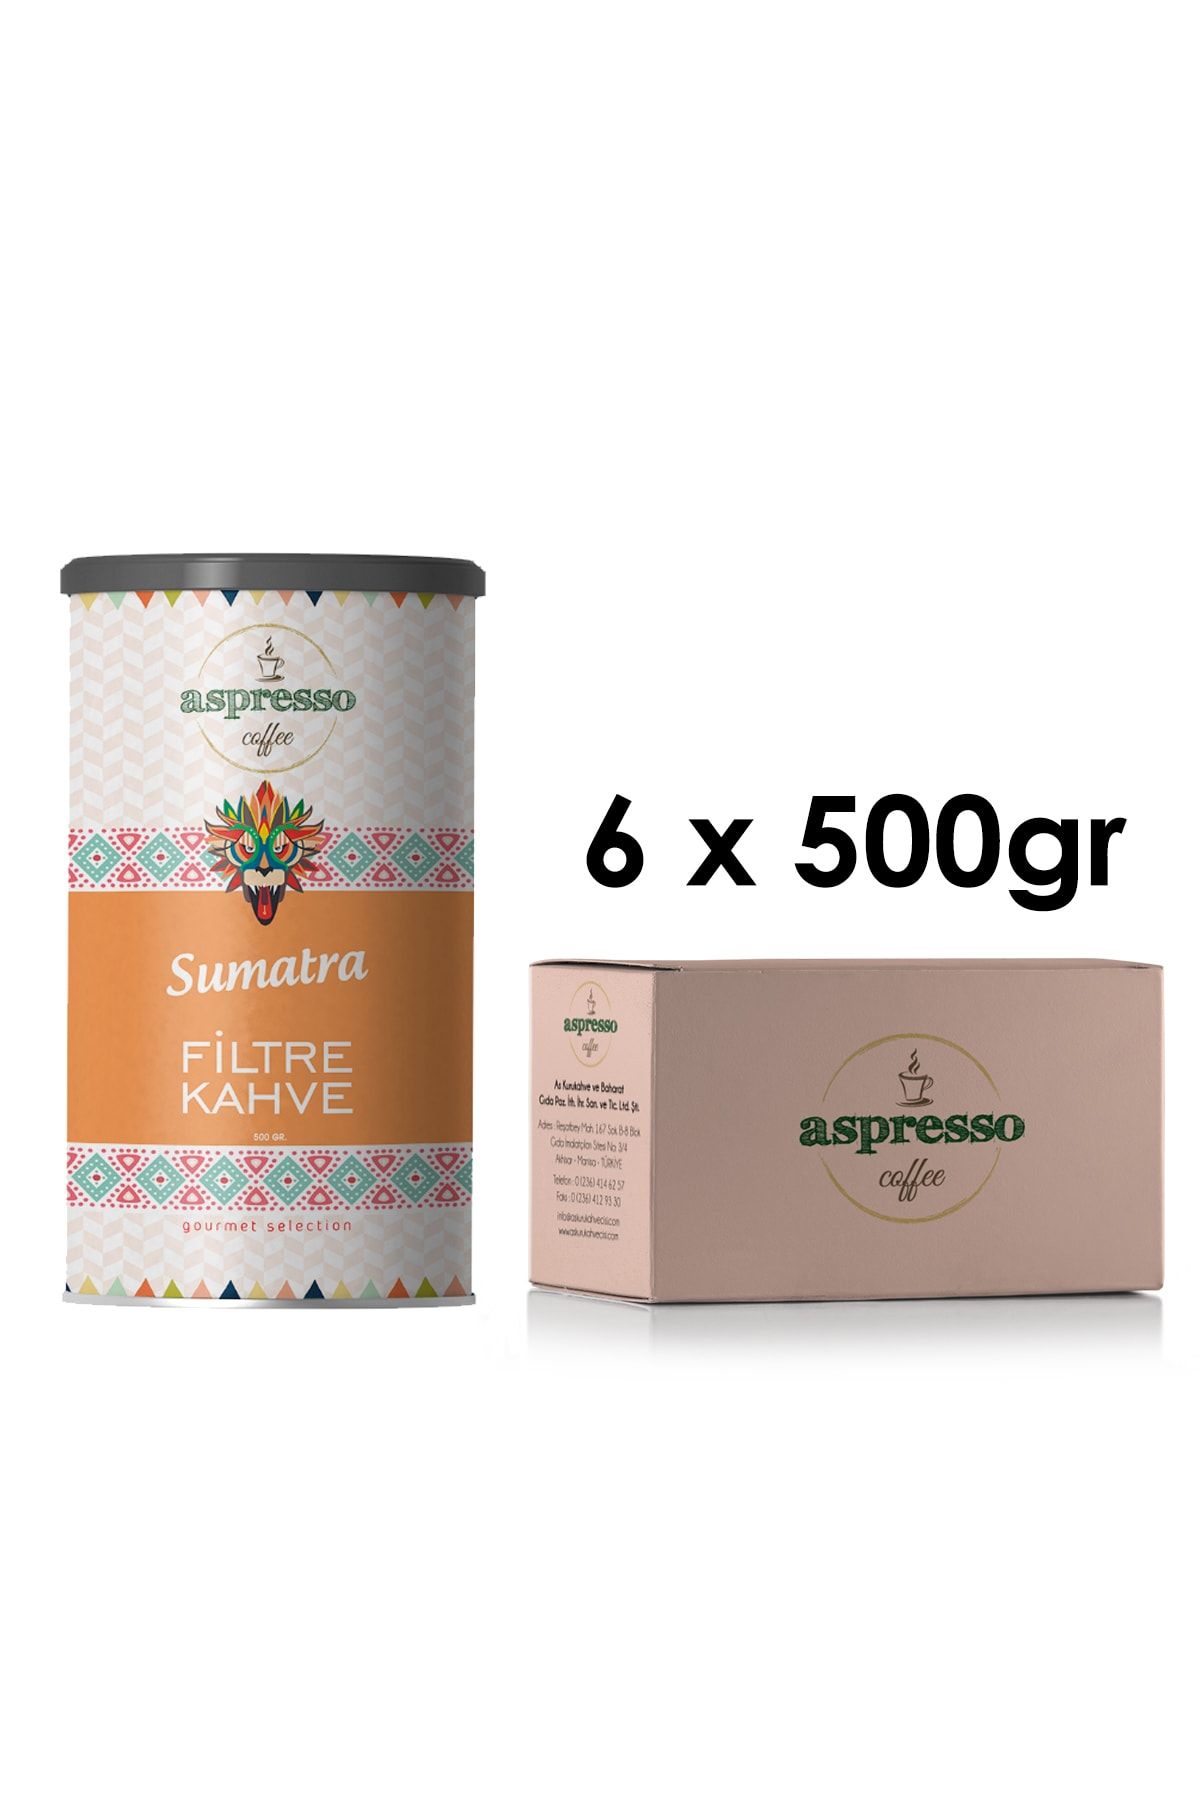 aspresso Sumatra Filtre Kahve 500 Gr. Teneke Kutu X 6 Adet